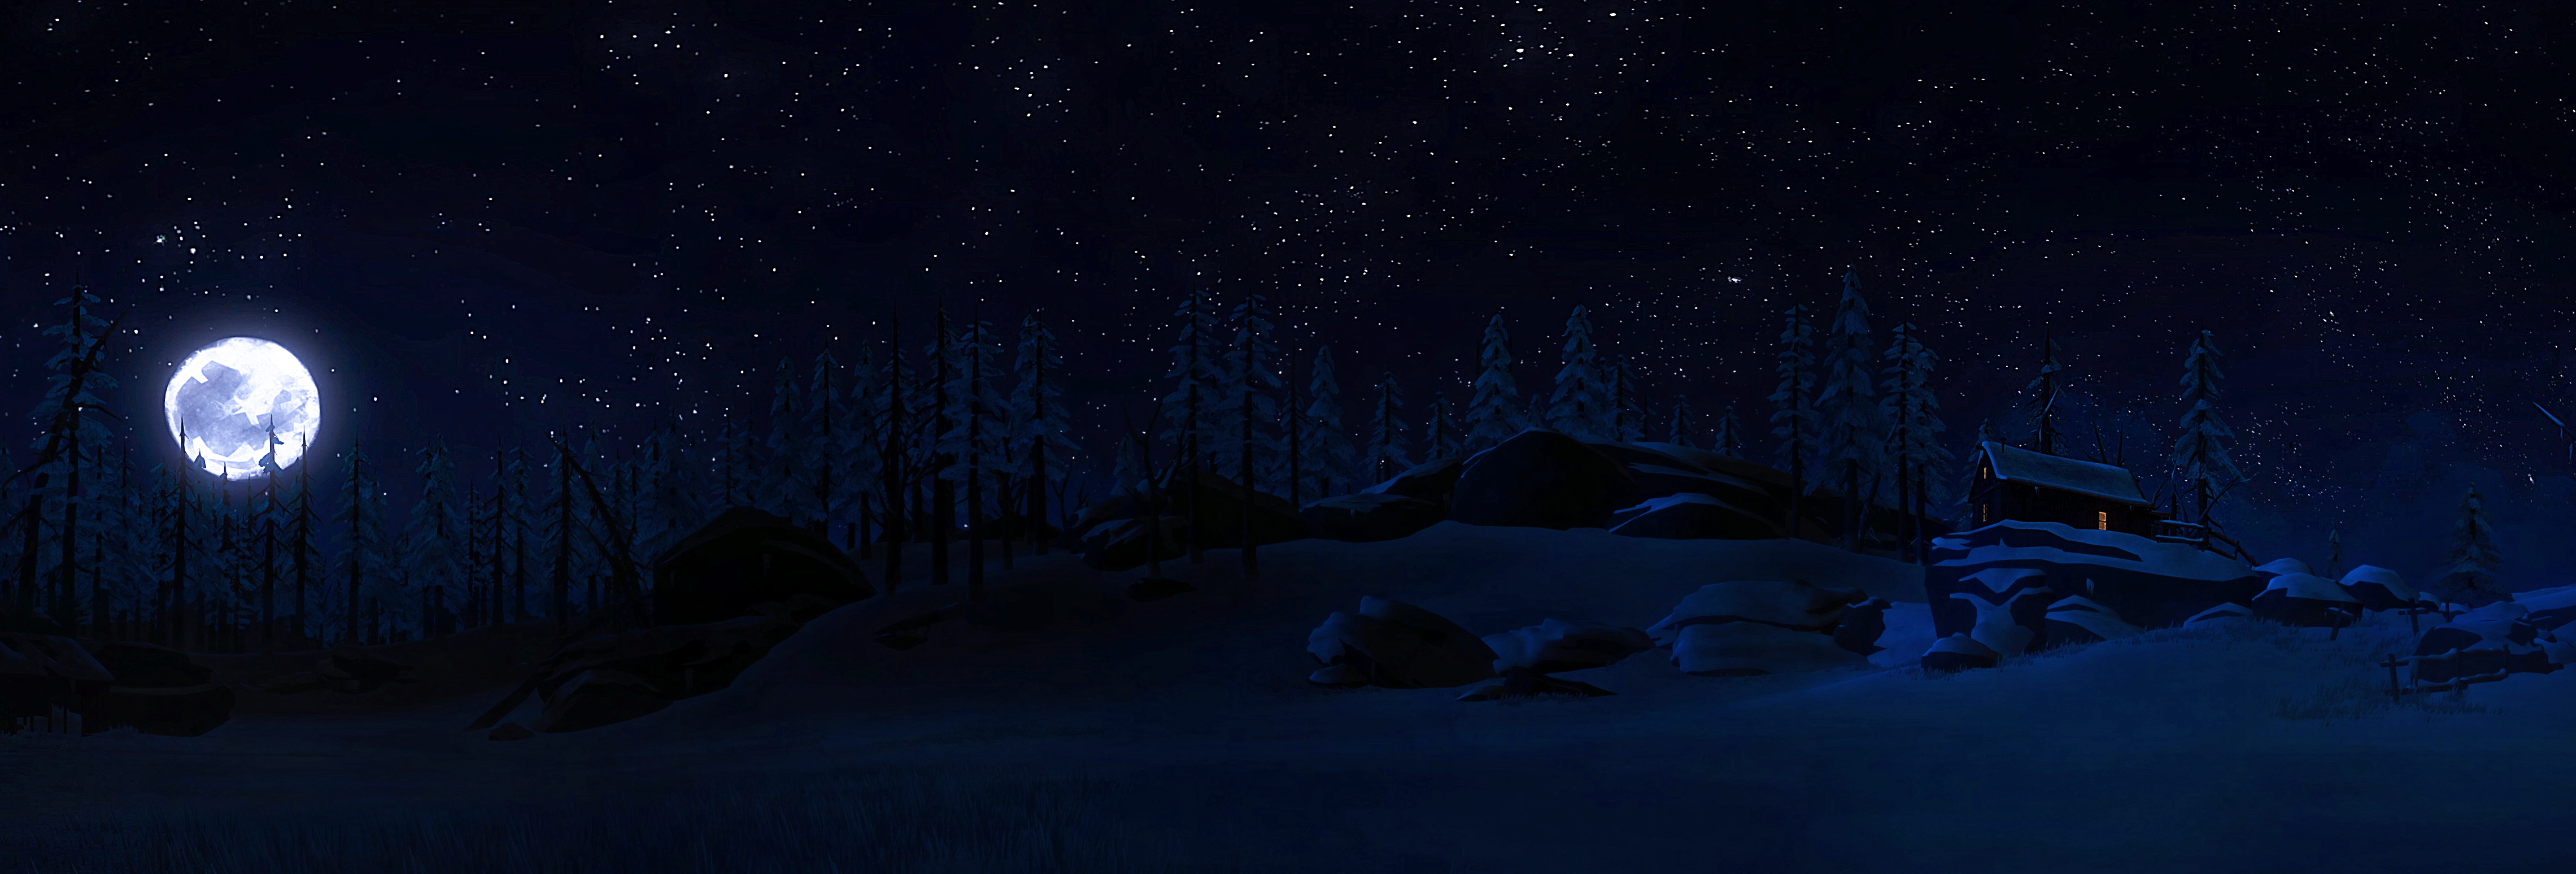 Ночной зимний лес панорама